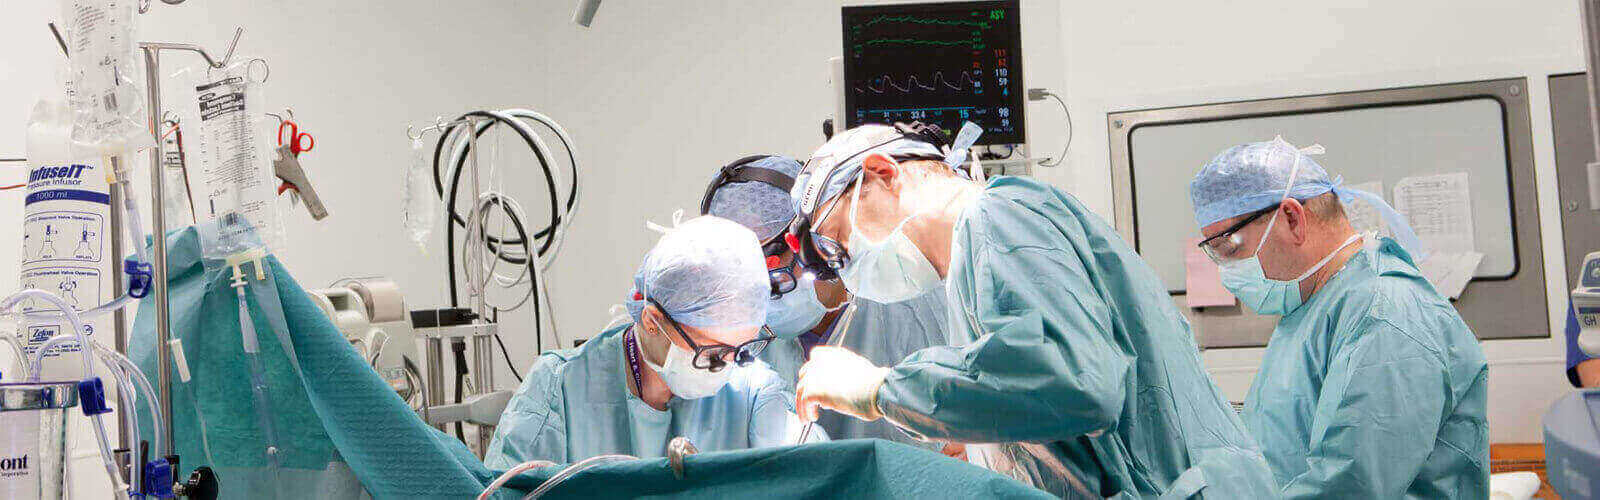 Heart Surgery Or Cardiac Surgery in Saudi Arabia